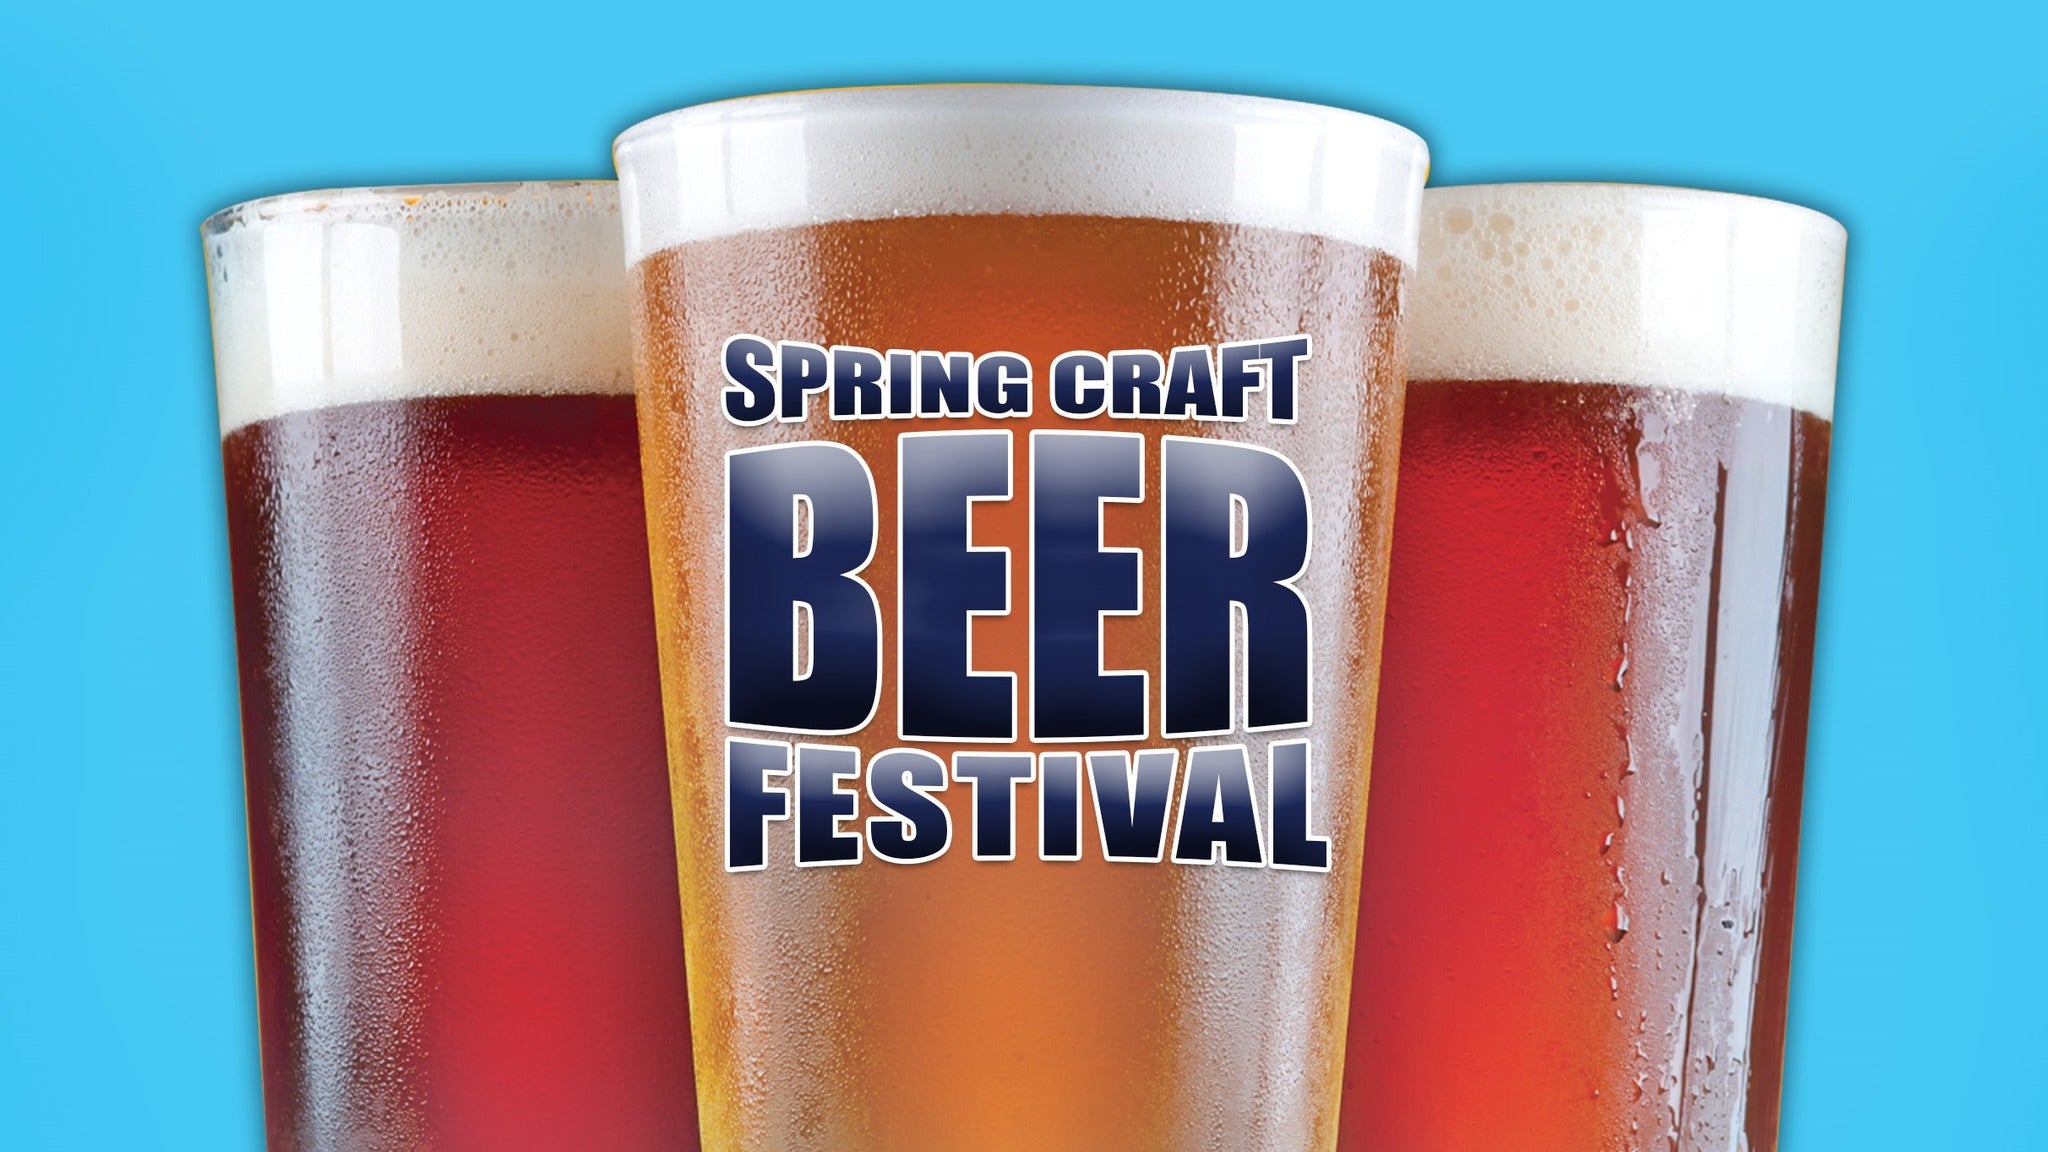 Spring Craft Beer Festival in Uniondale promo photo for Internet presale offer code